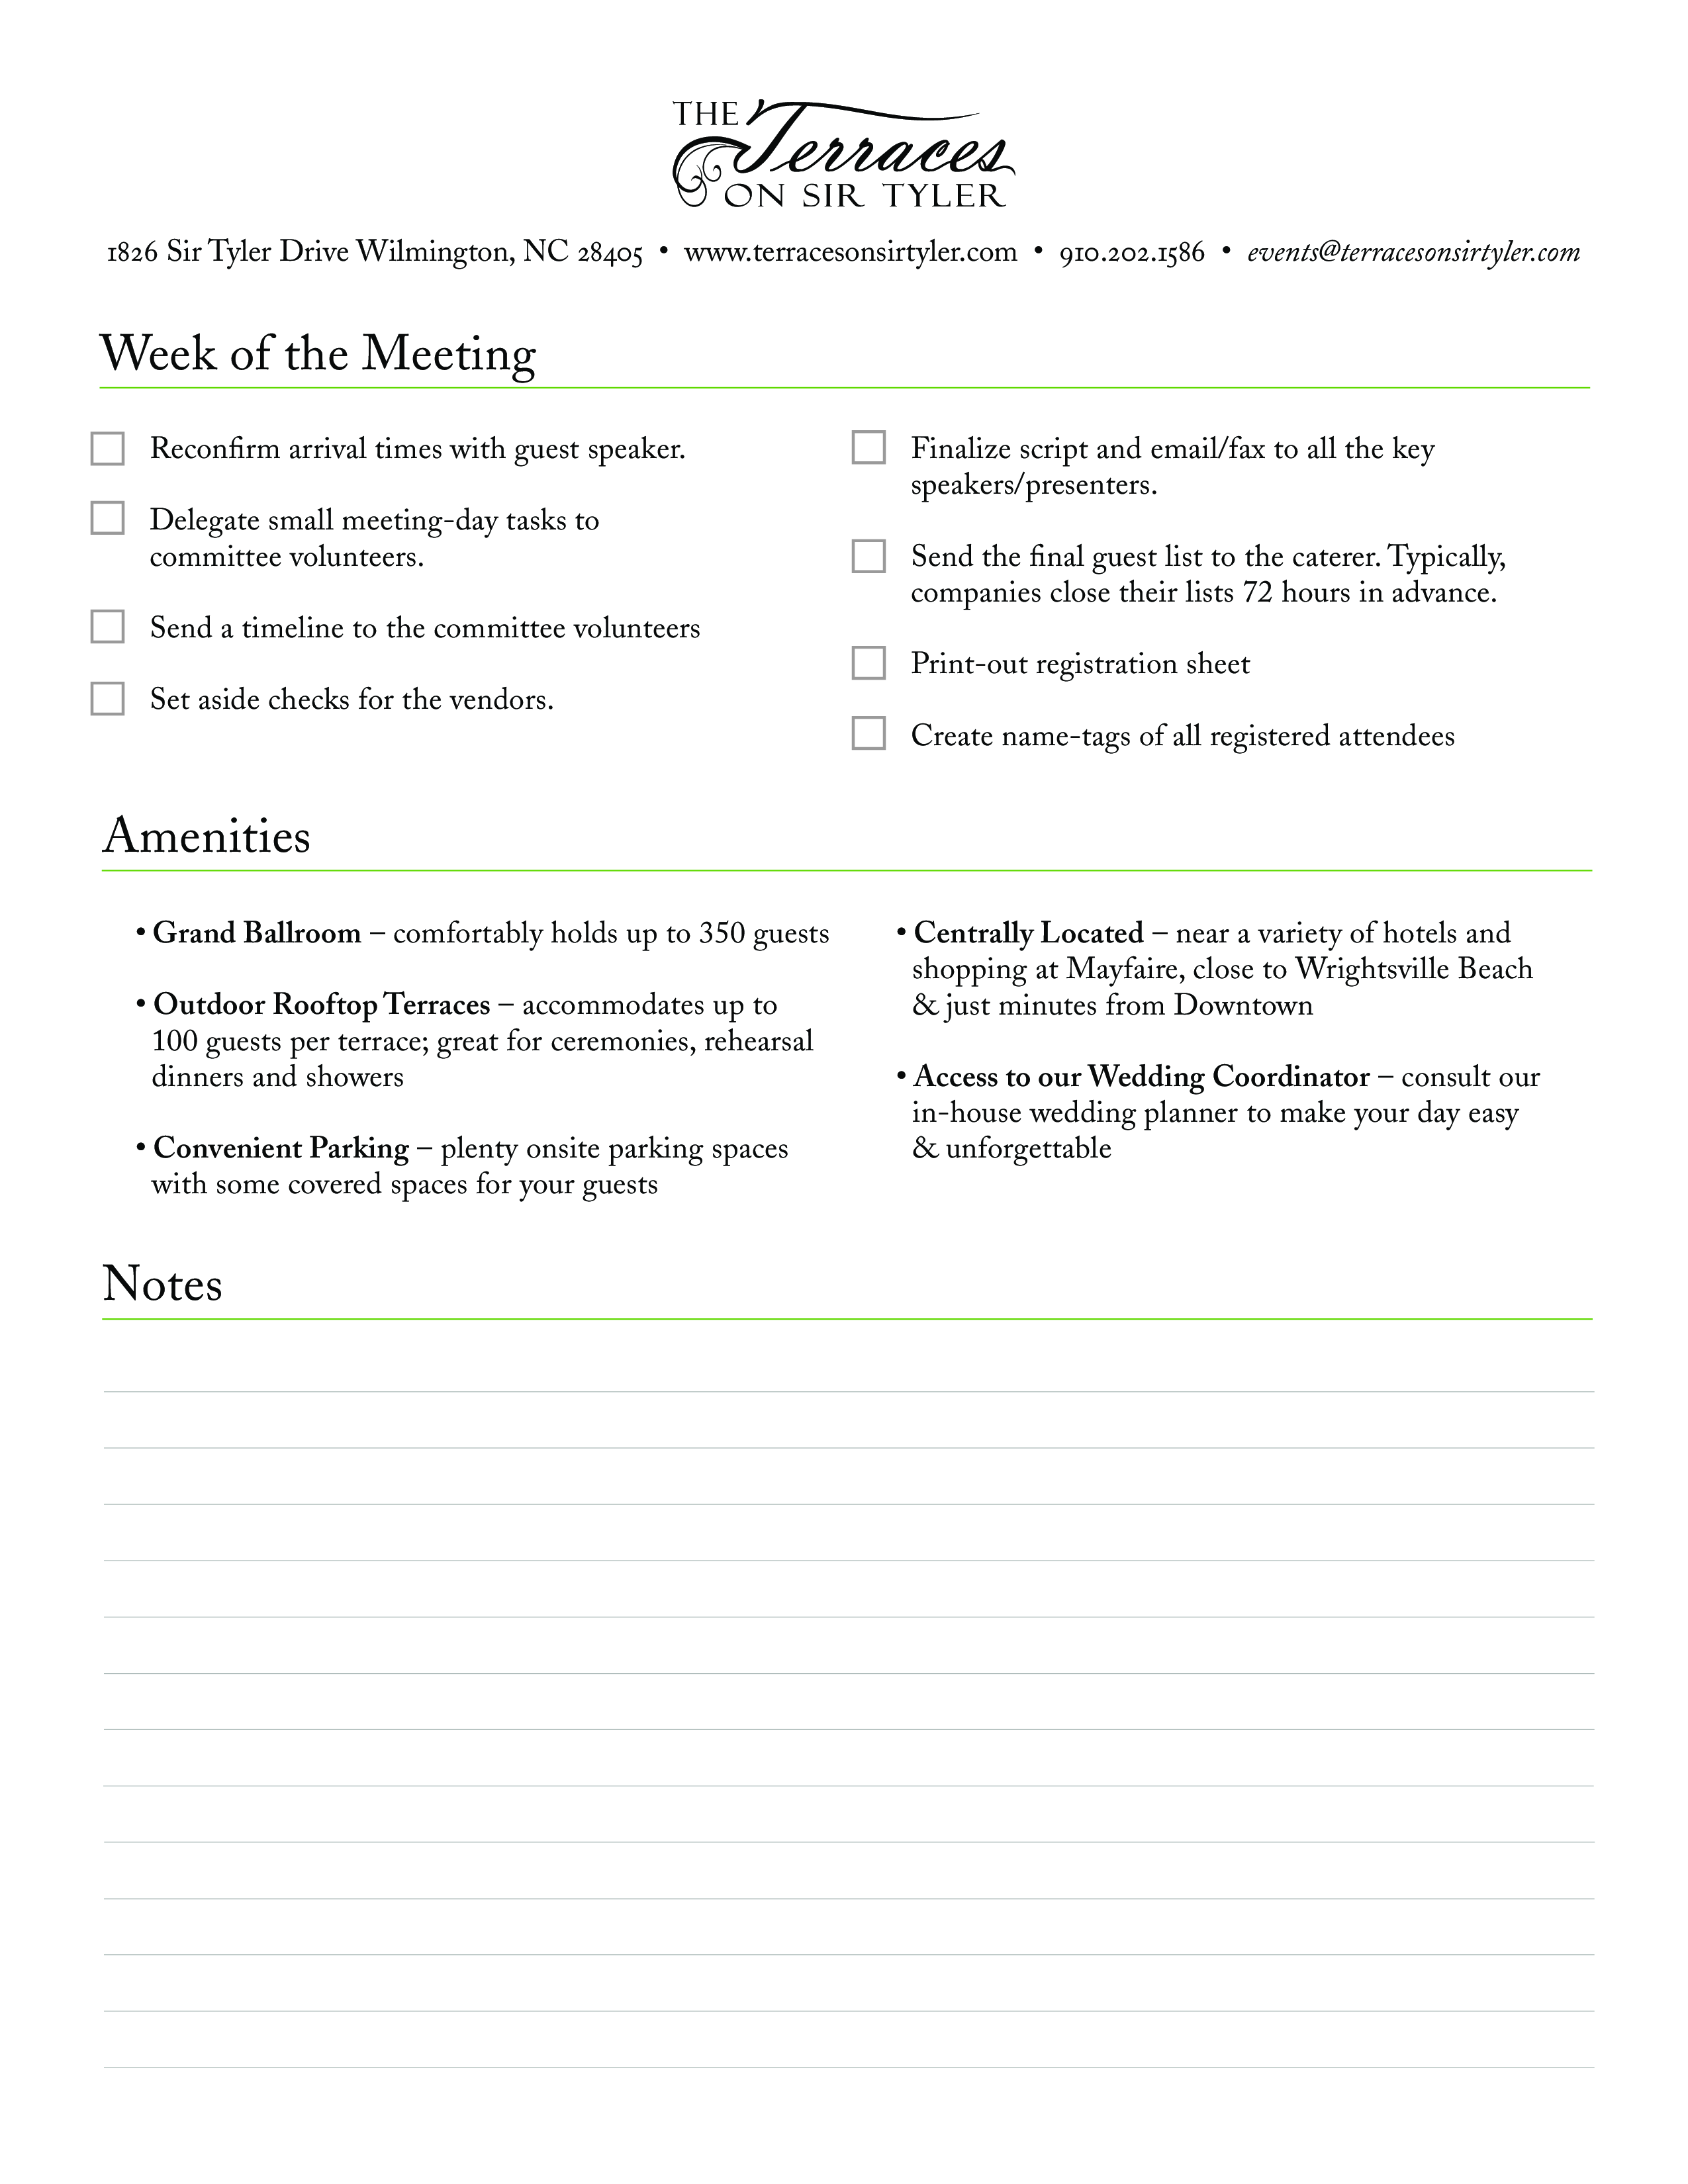 corporate-event-planning-checklist-templates-at-allbusinesstemplates